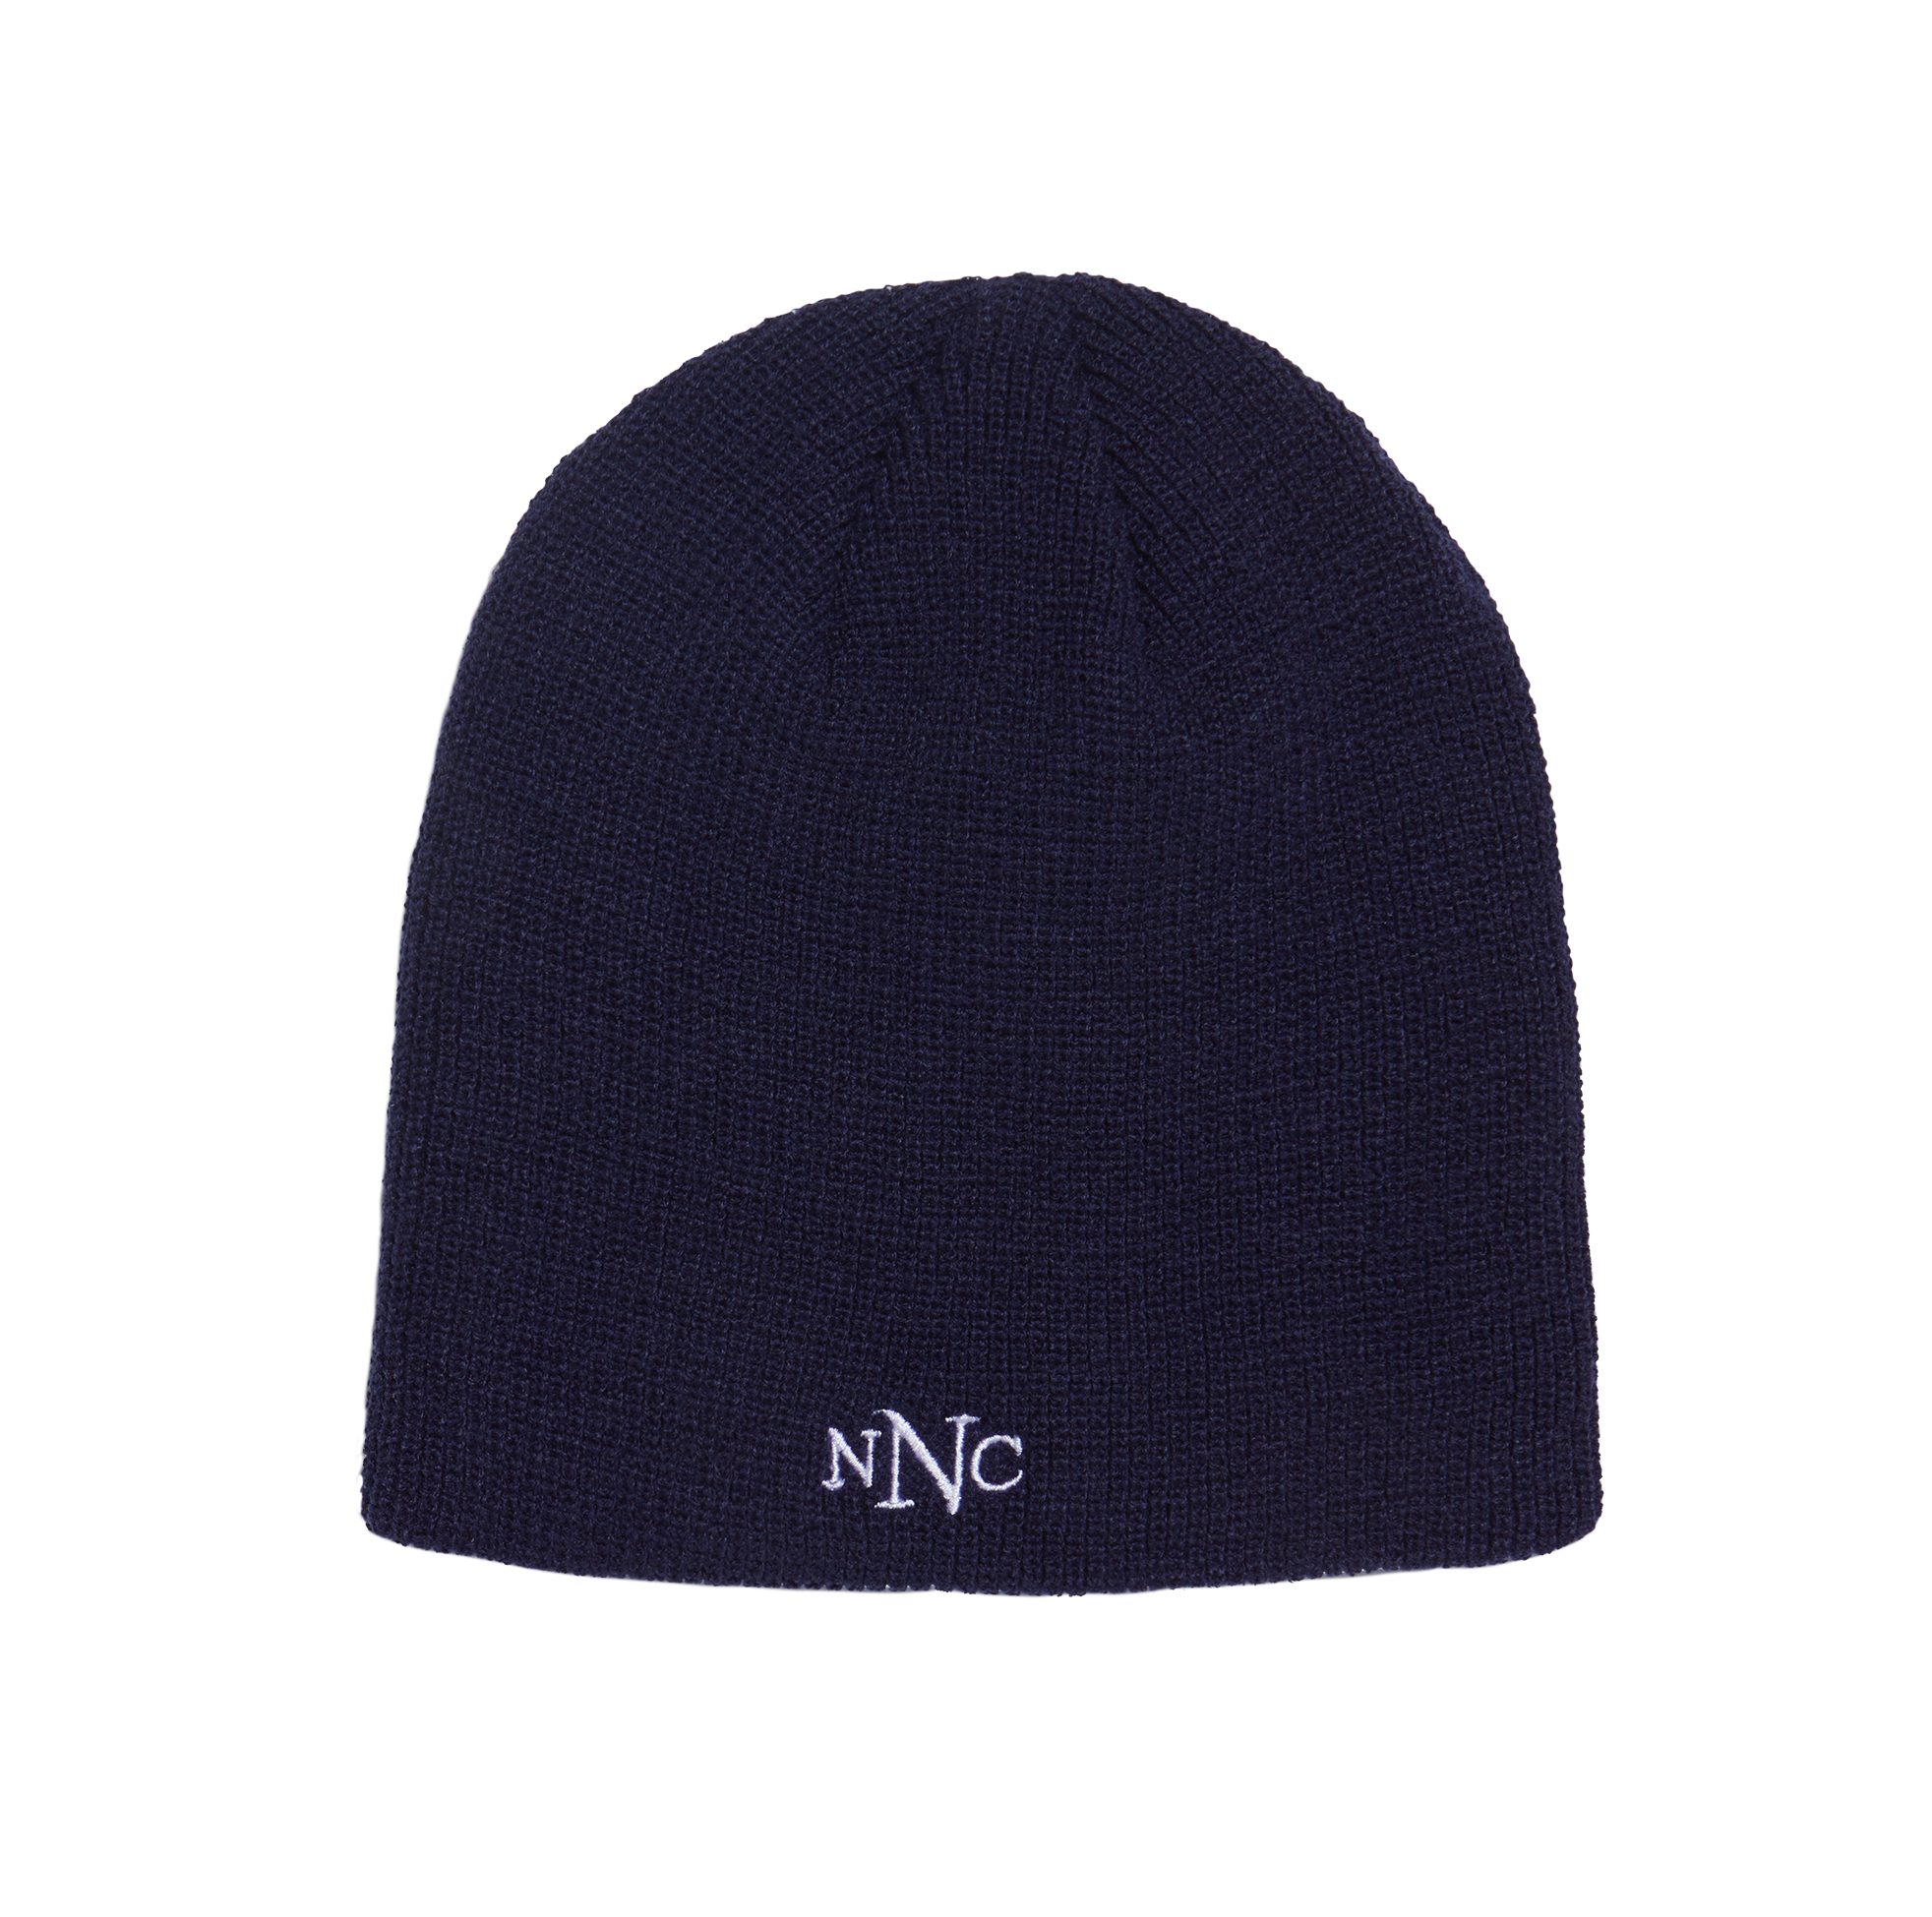 NEASE NNC logo skullcap beanie (navy)